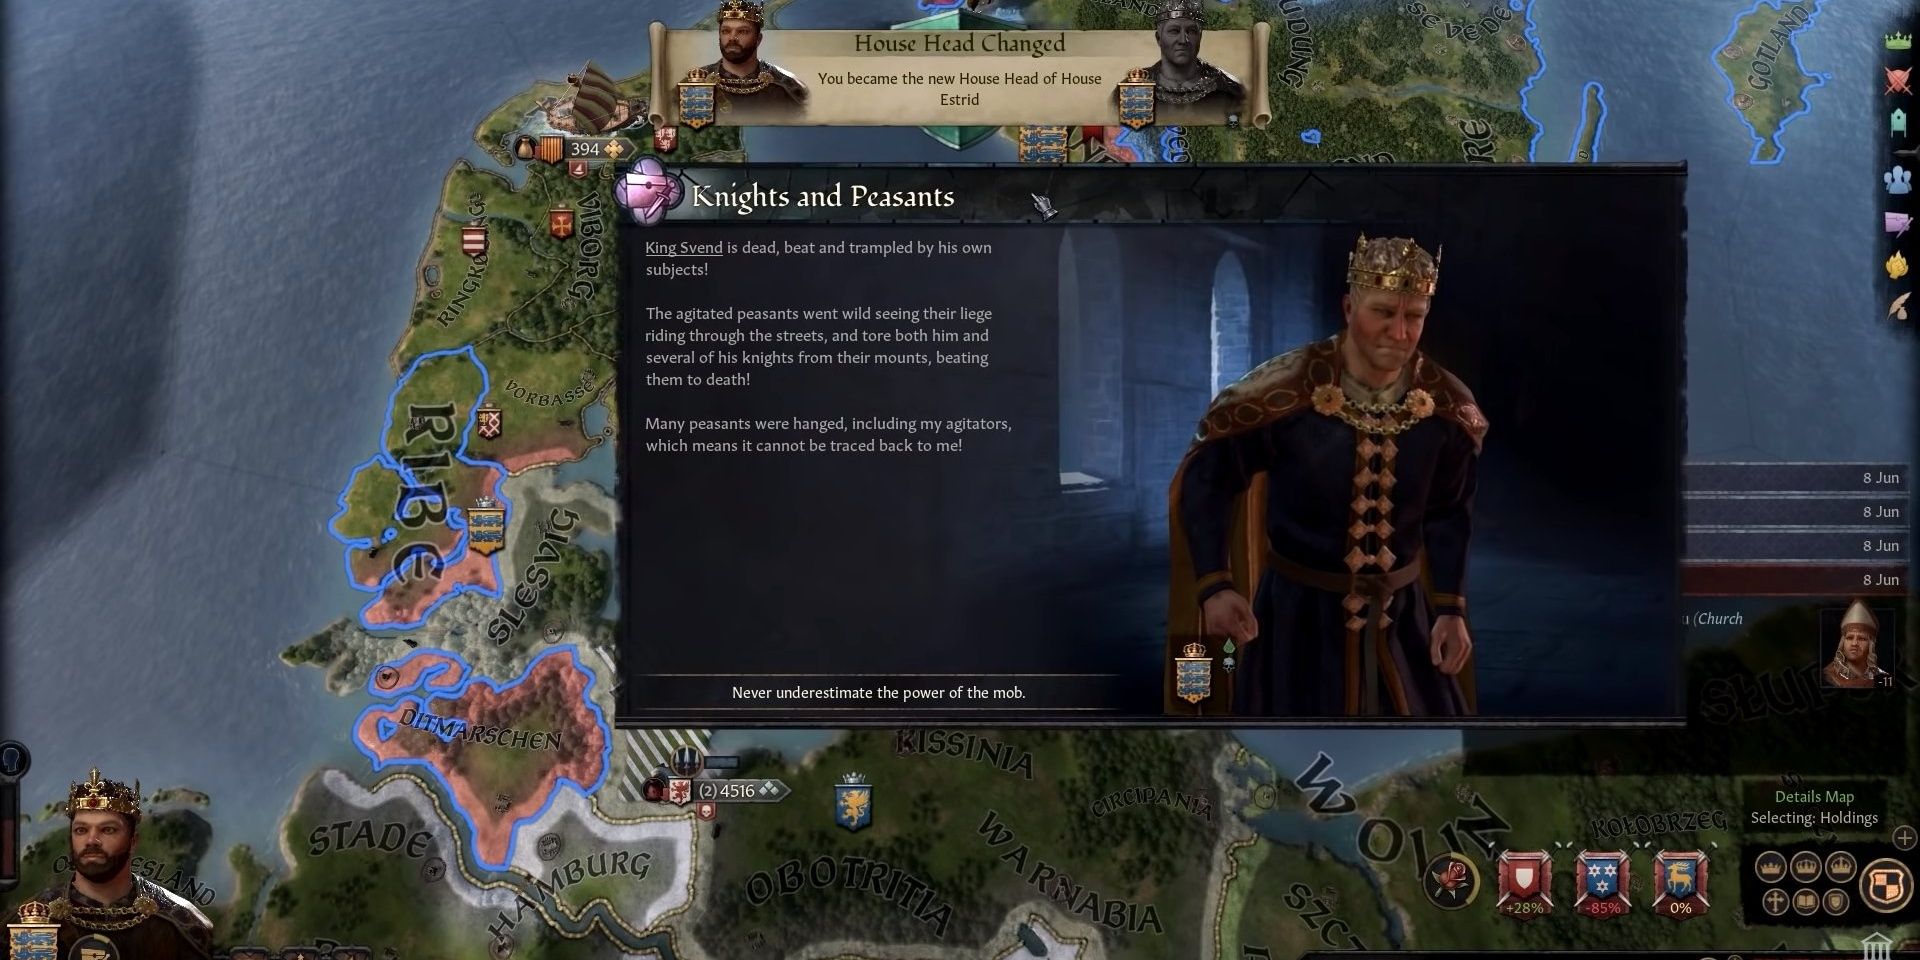 King Svend Of Denmark in Crusader Kings 3